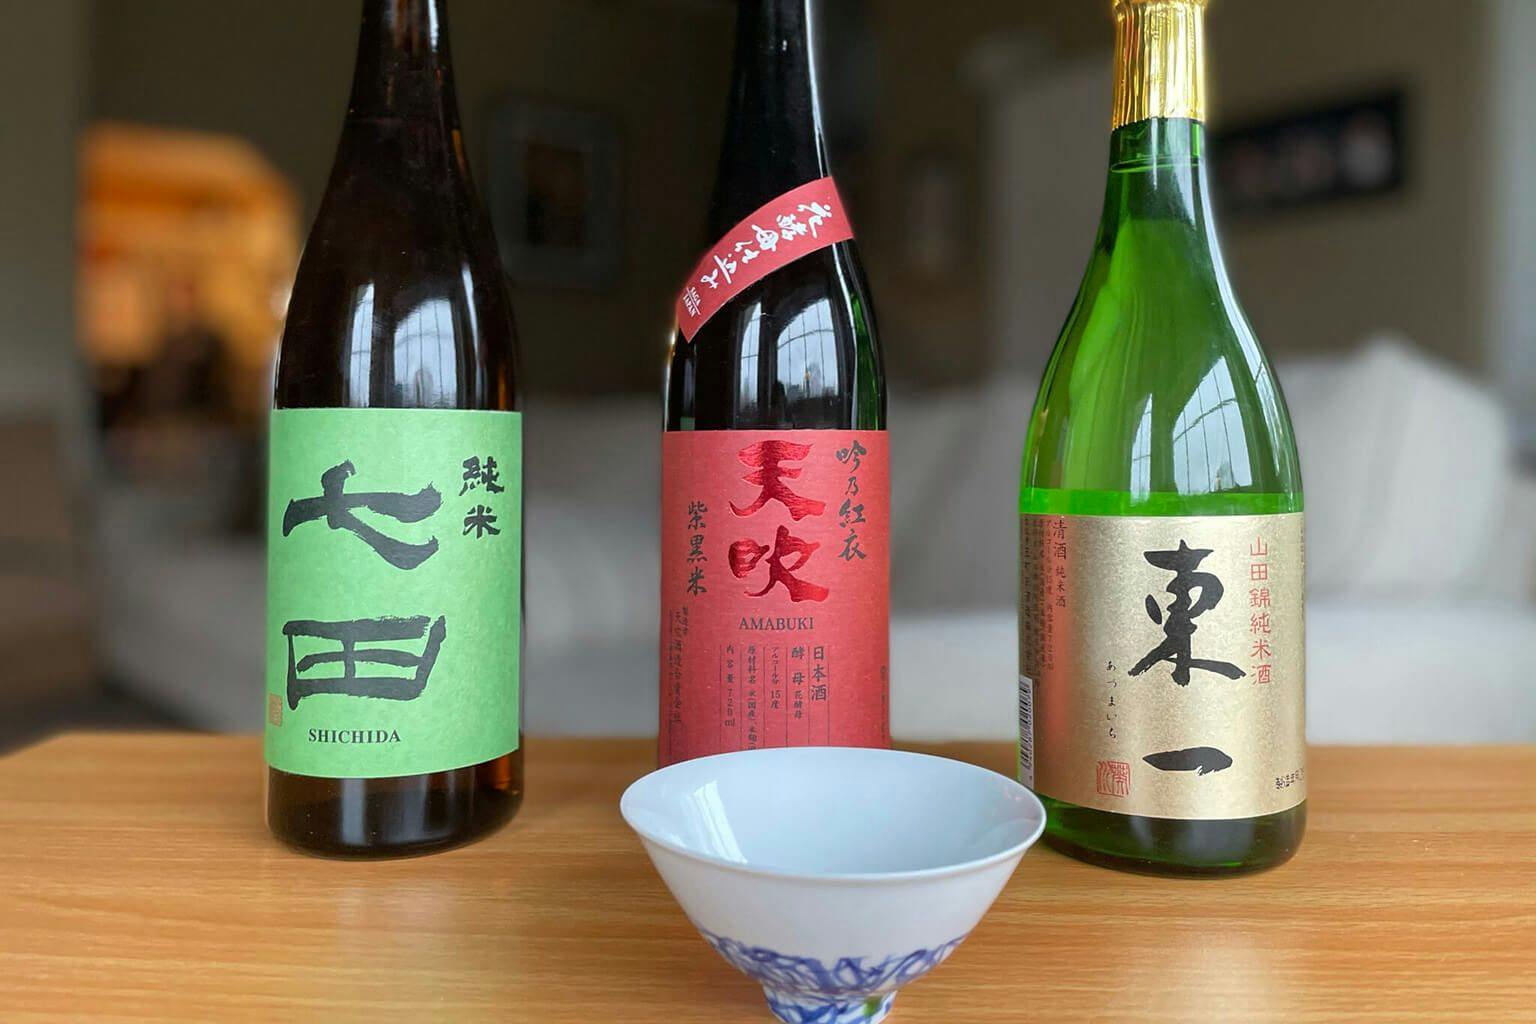 Shichida Junmai, Amabuki Gin no Kurenai and Azumaichi Junmai